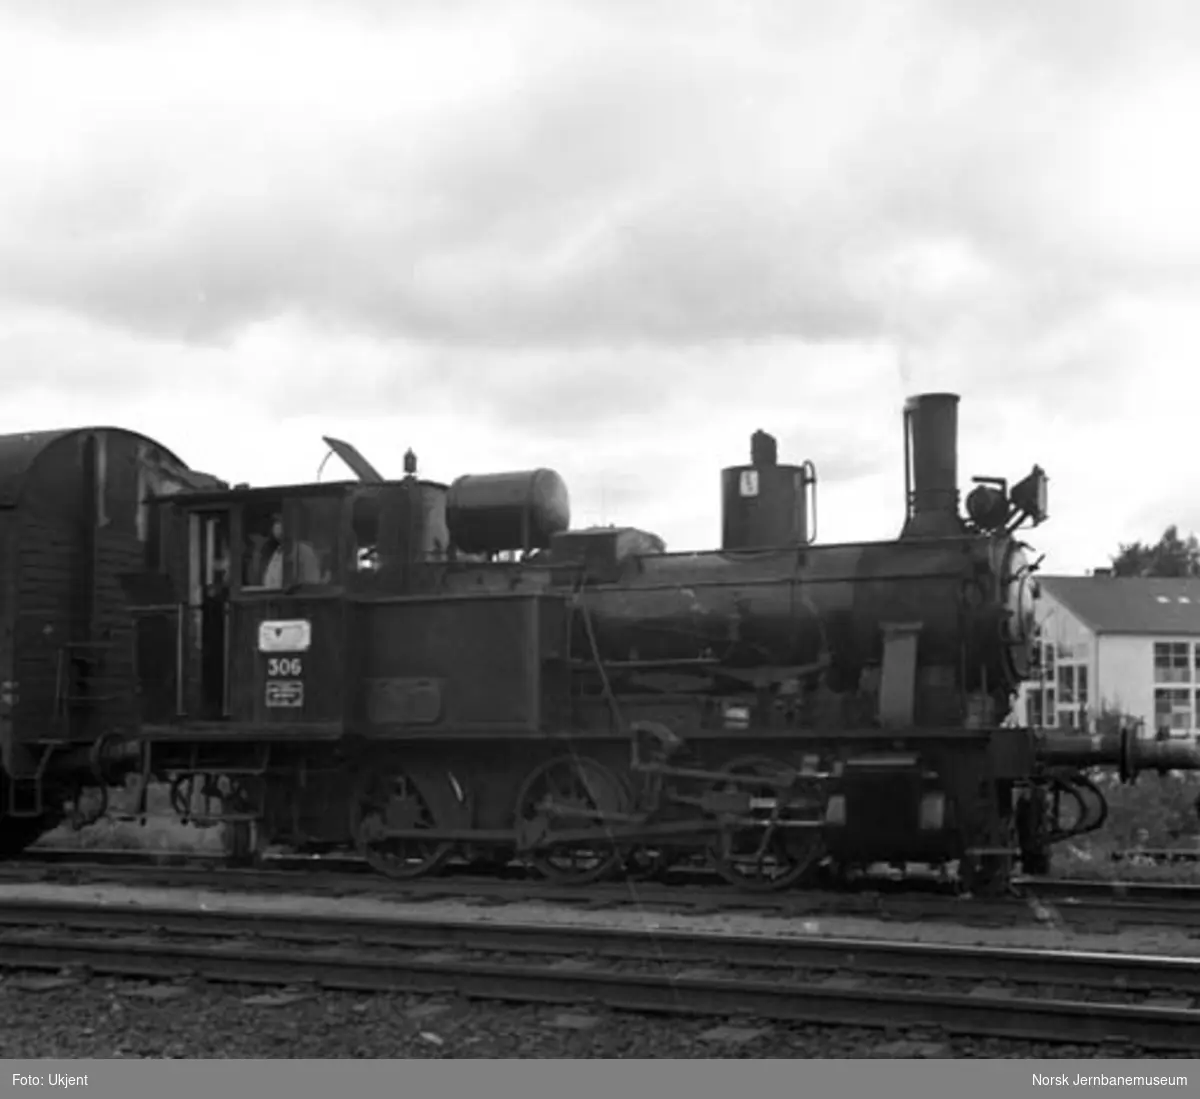 Damplokomotiv type 25a nr. 306